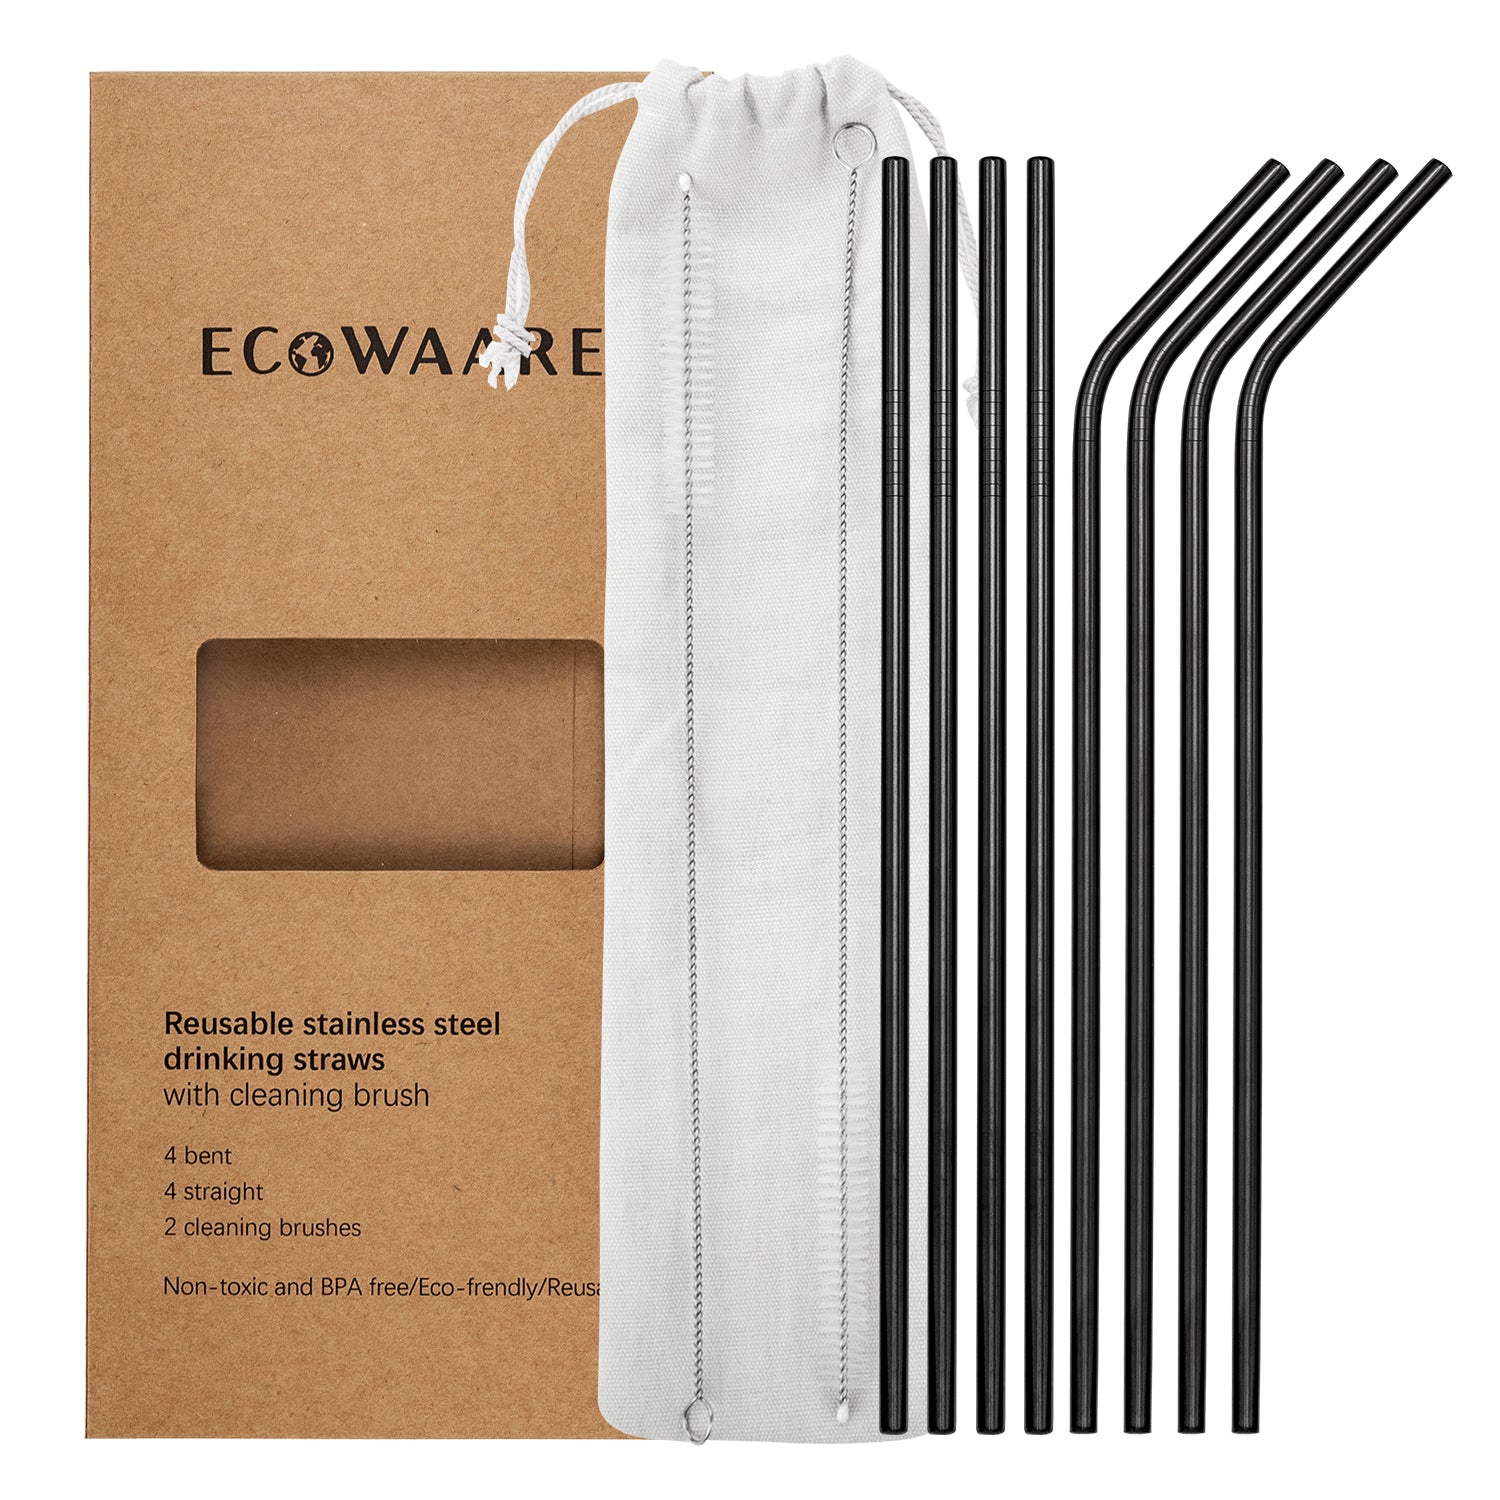 GoodCook® Reusable Straws, 24 ct - Harris Teeter